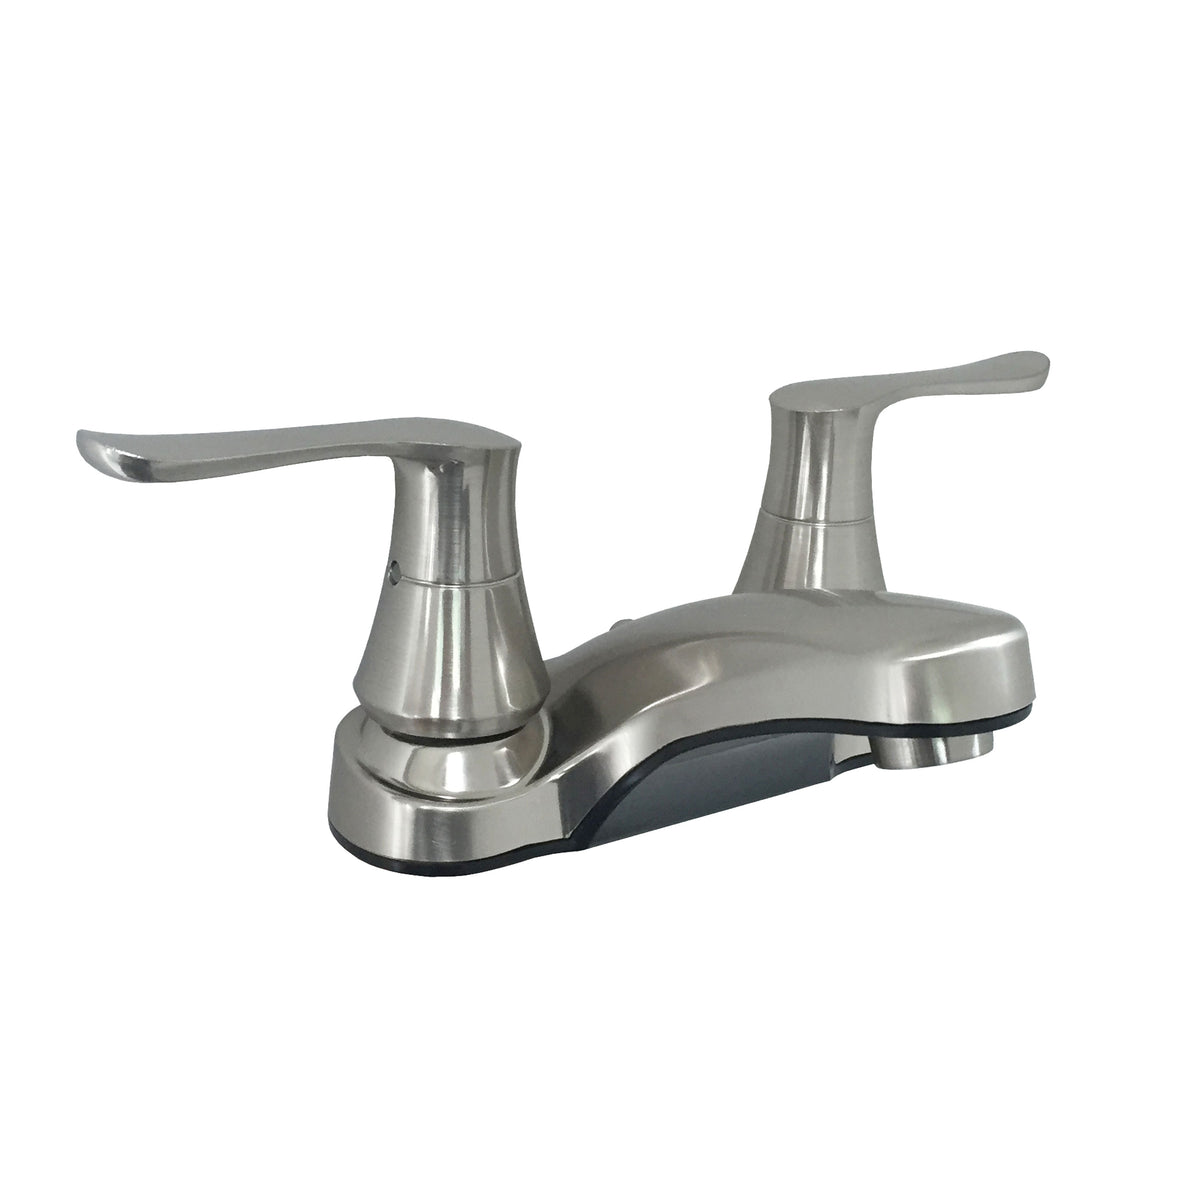 Empire Brass U-YNN77N-DH3 RV Non-Metallic Bathroom Faucet with Solid Saber Handles - 4", Brushed Nickel